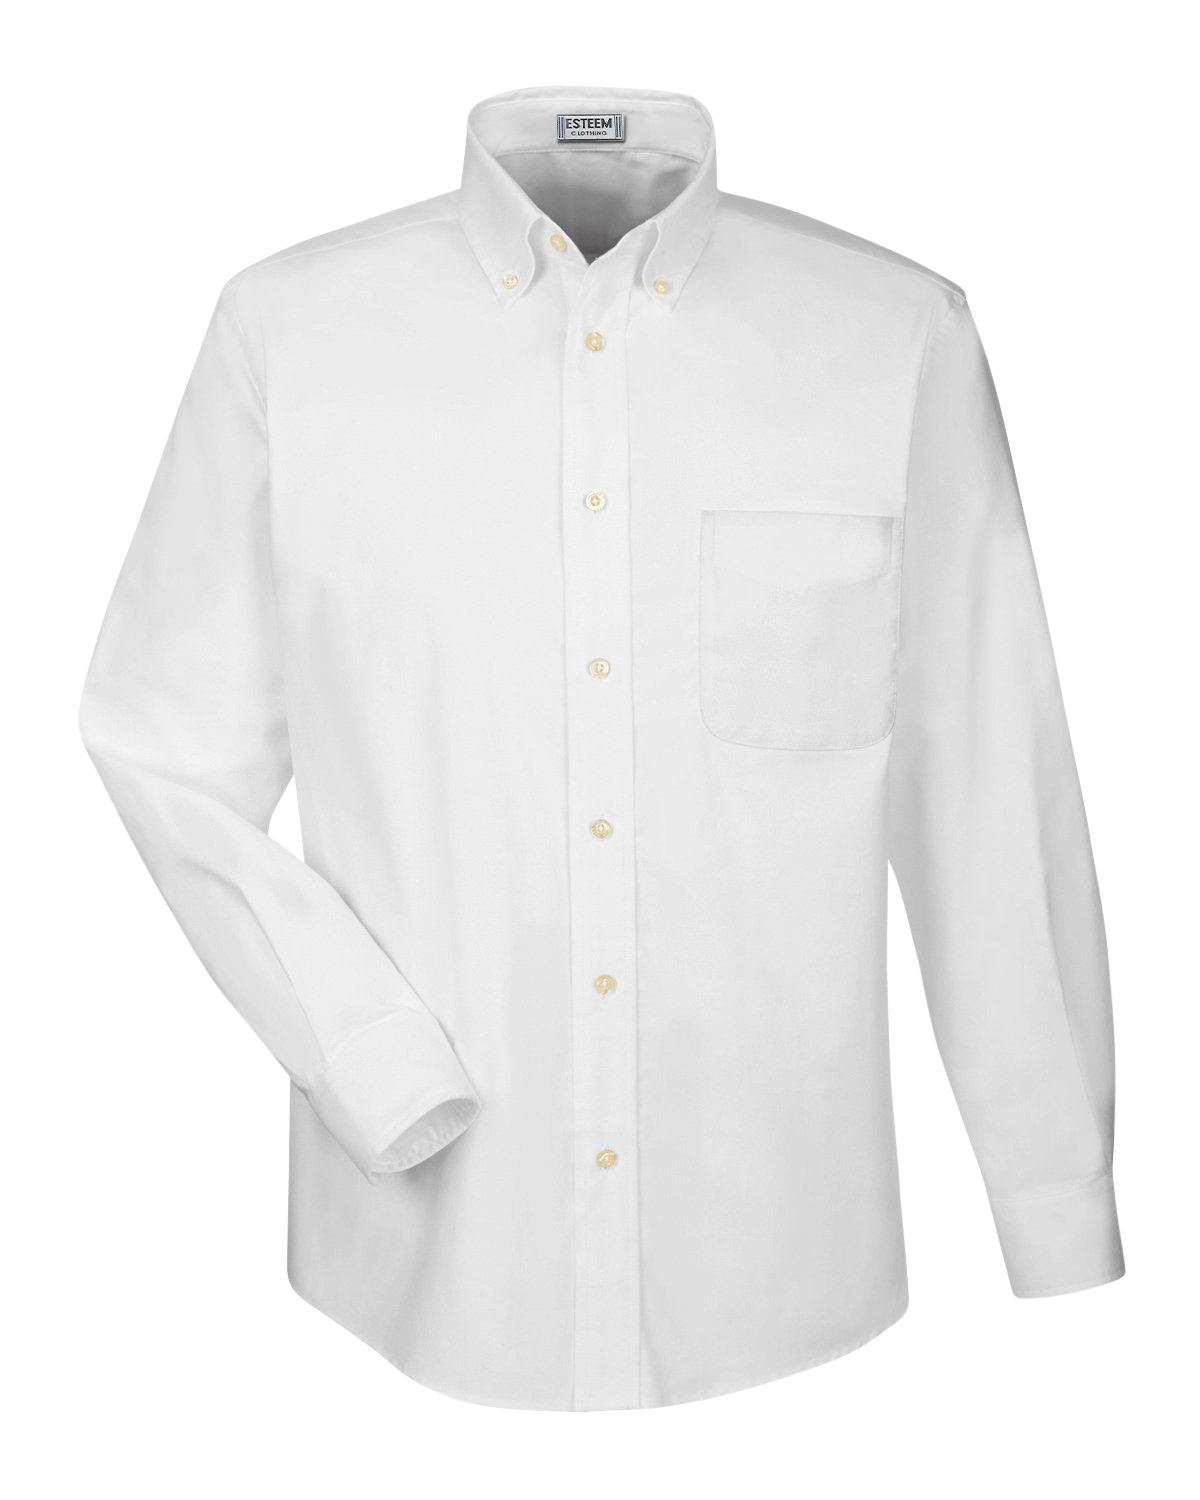 CVC 60/40 Men's long sleeve oxford shirt with logo - RES